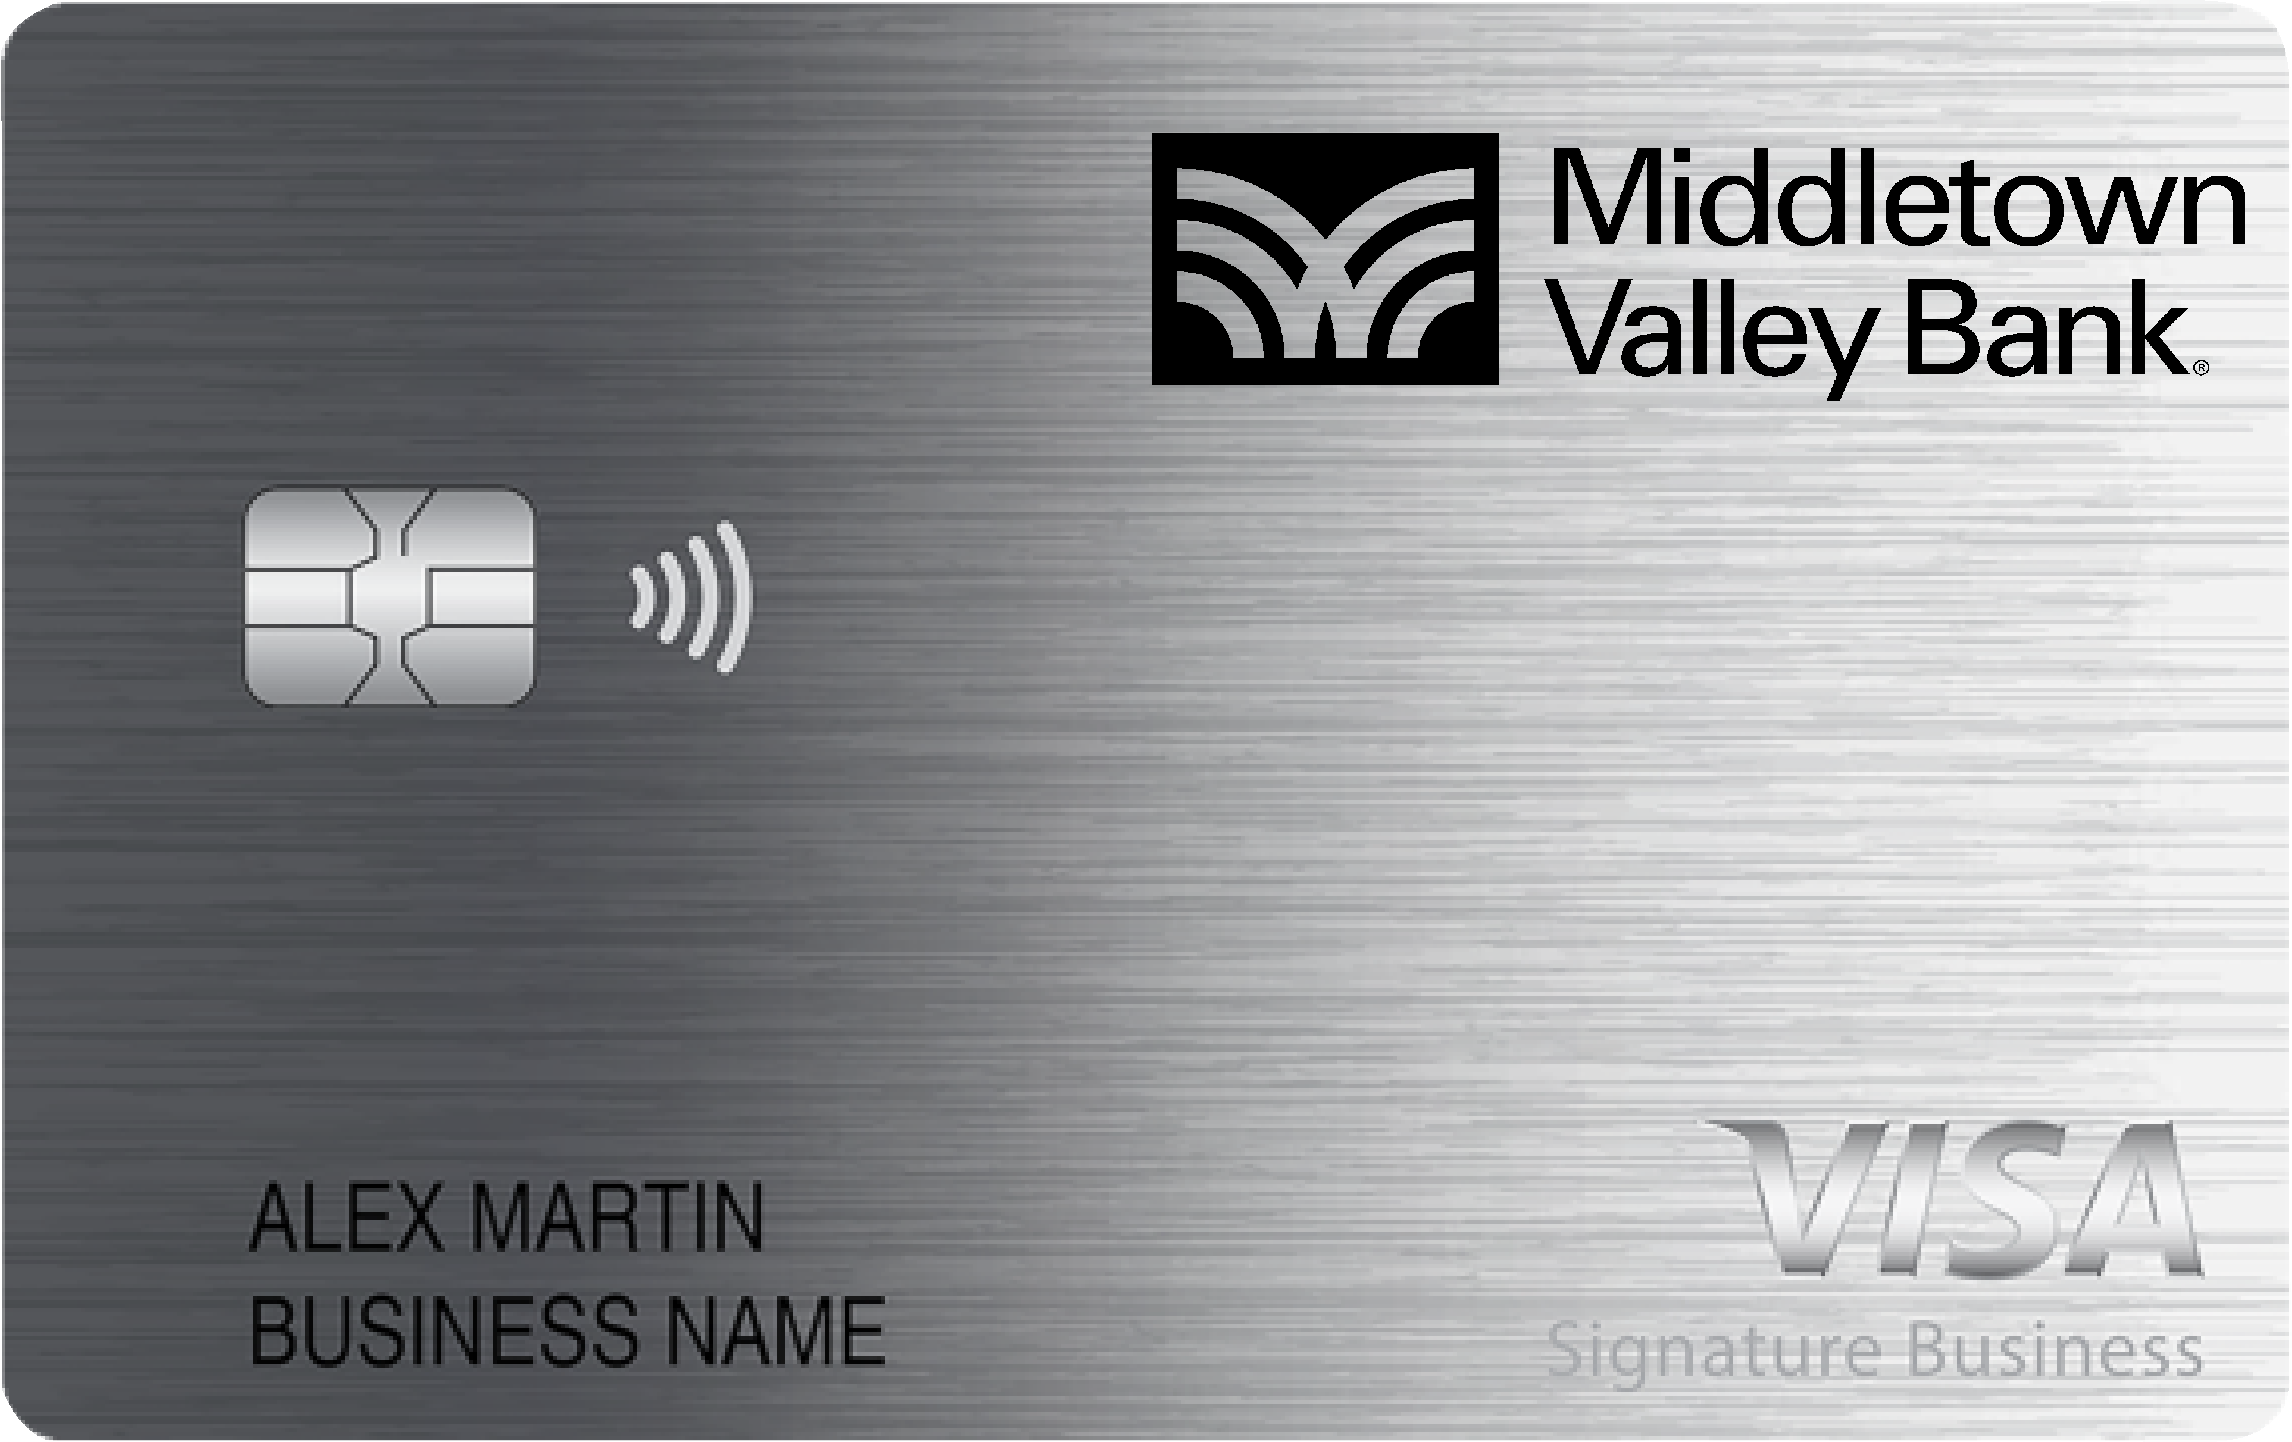 Middletown Valley Bank Smart Business Rewards Card